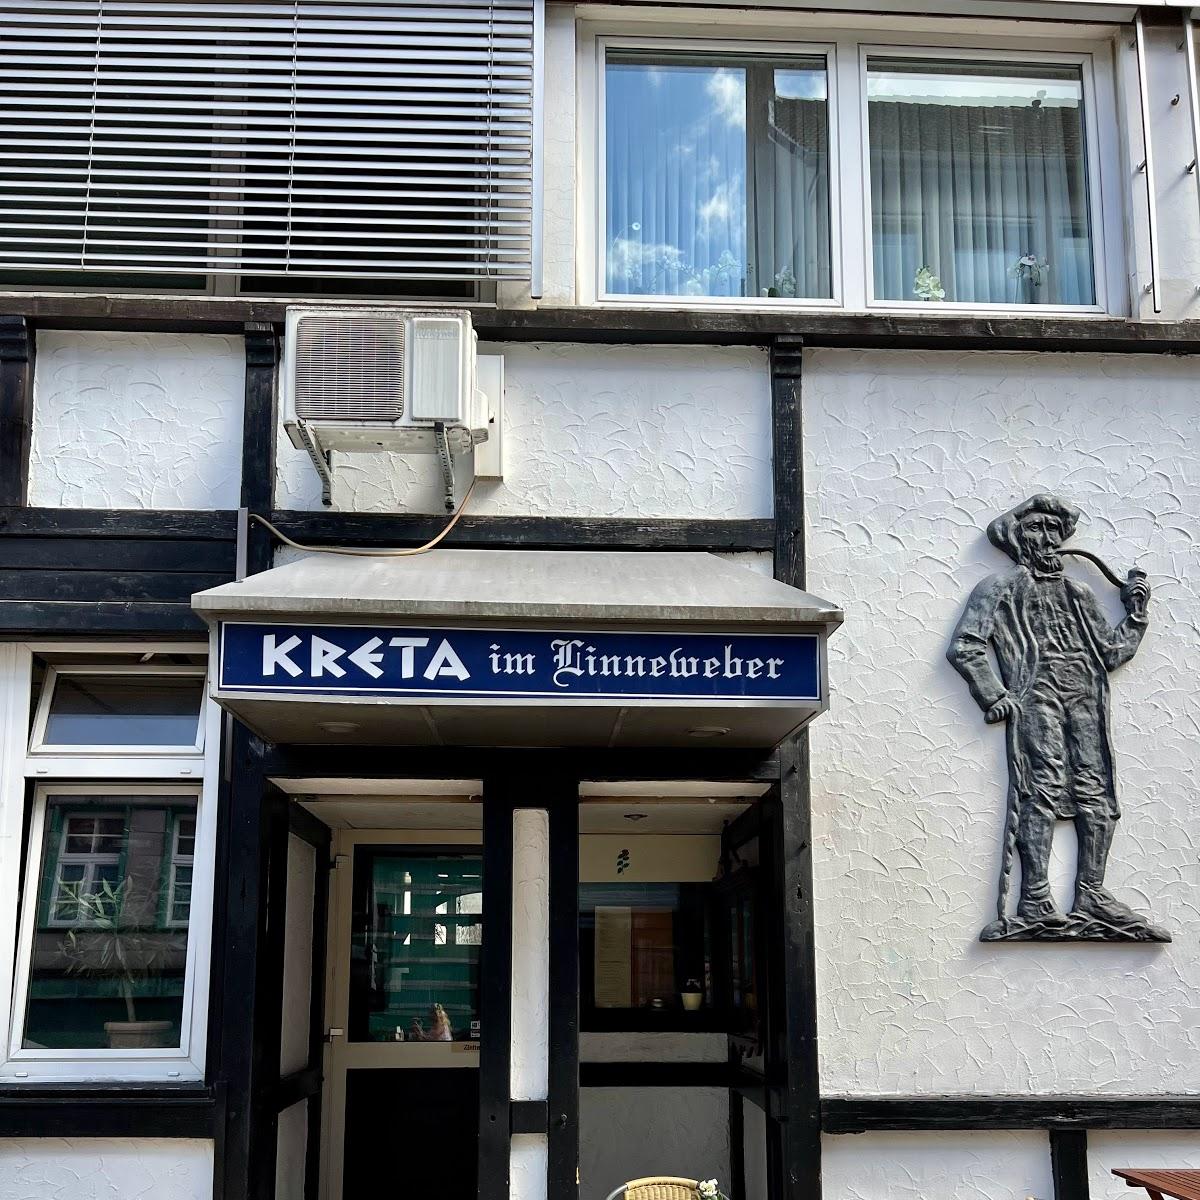 Restaurant "Restaurant Kreta" in Bielefeld